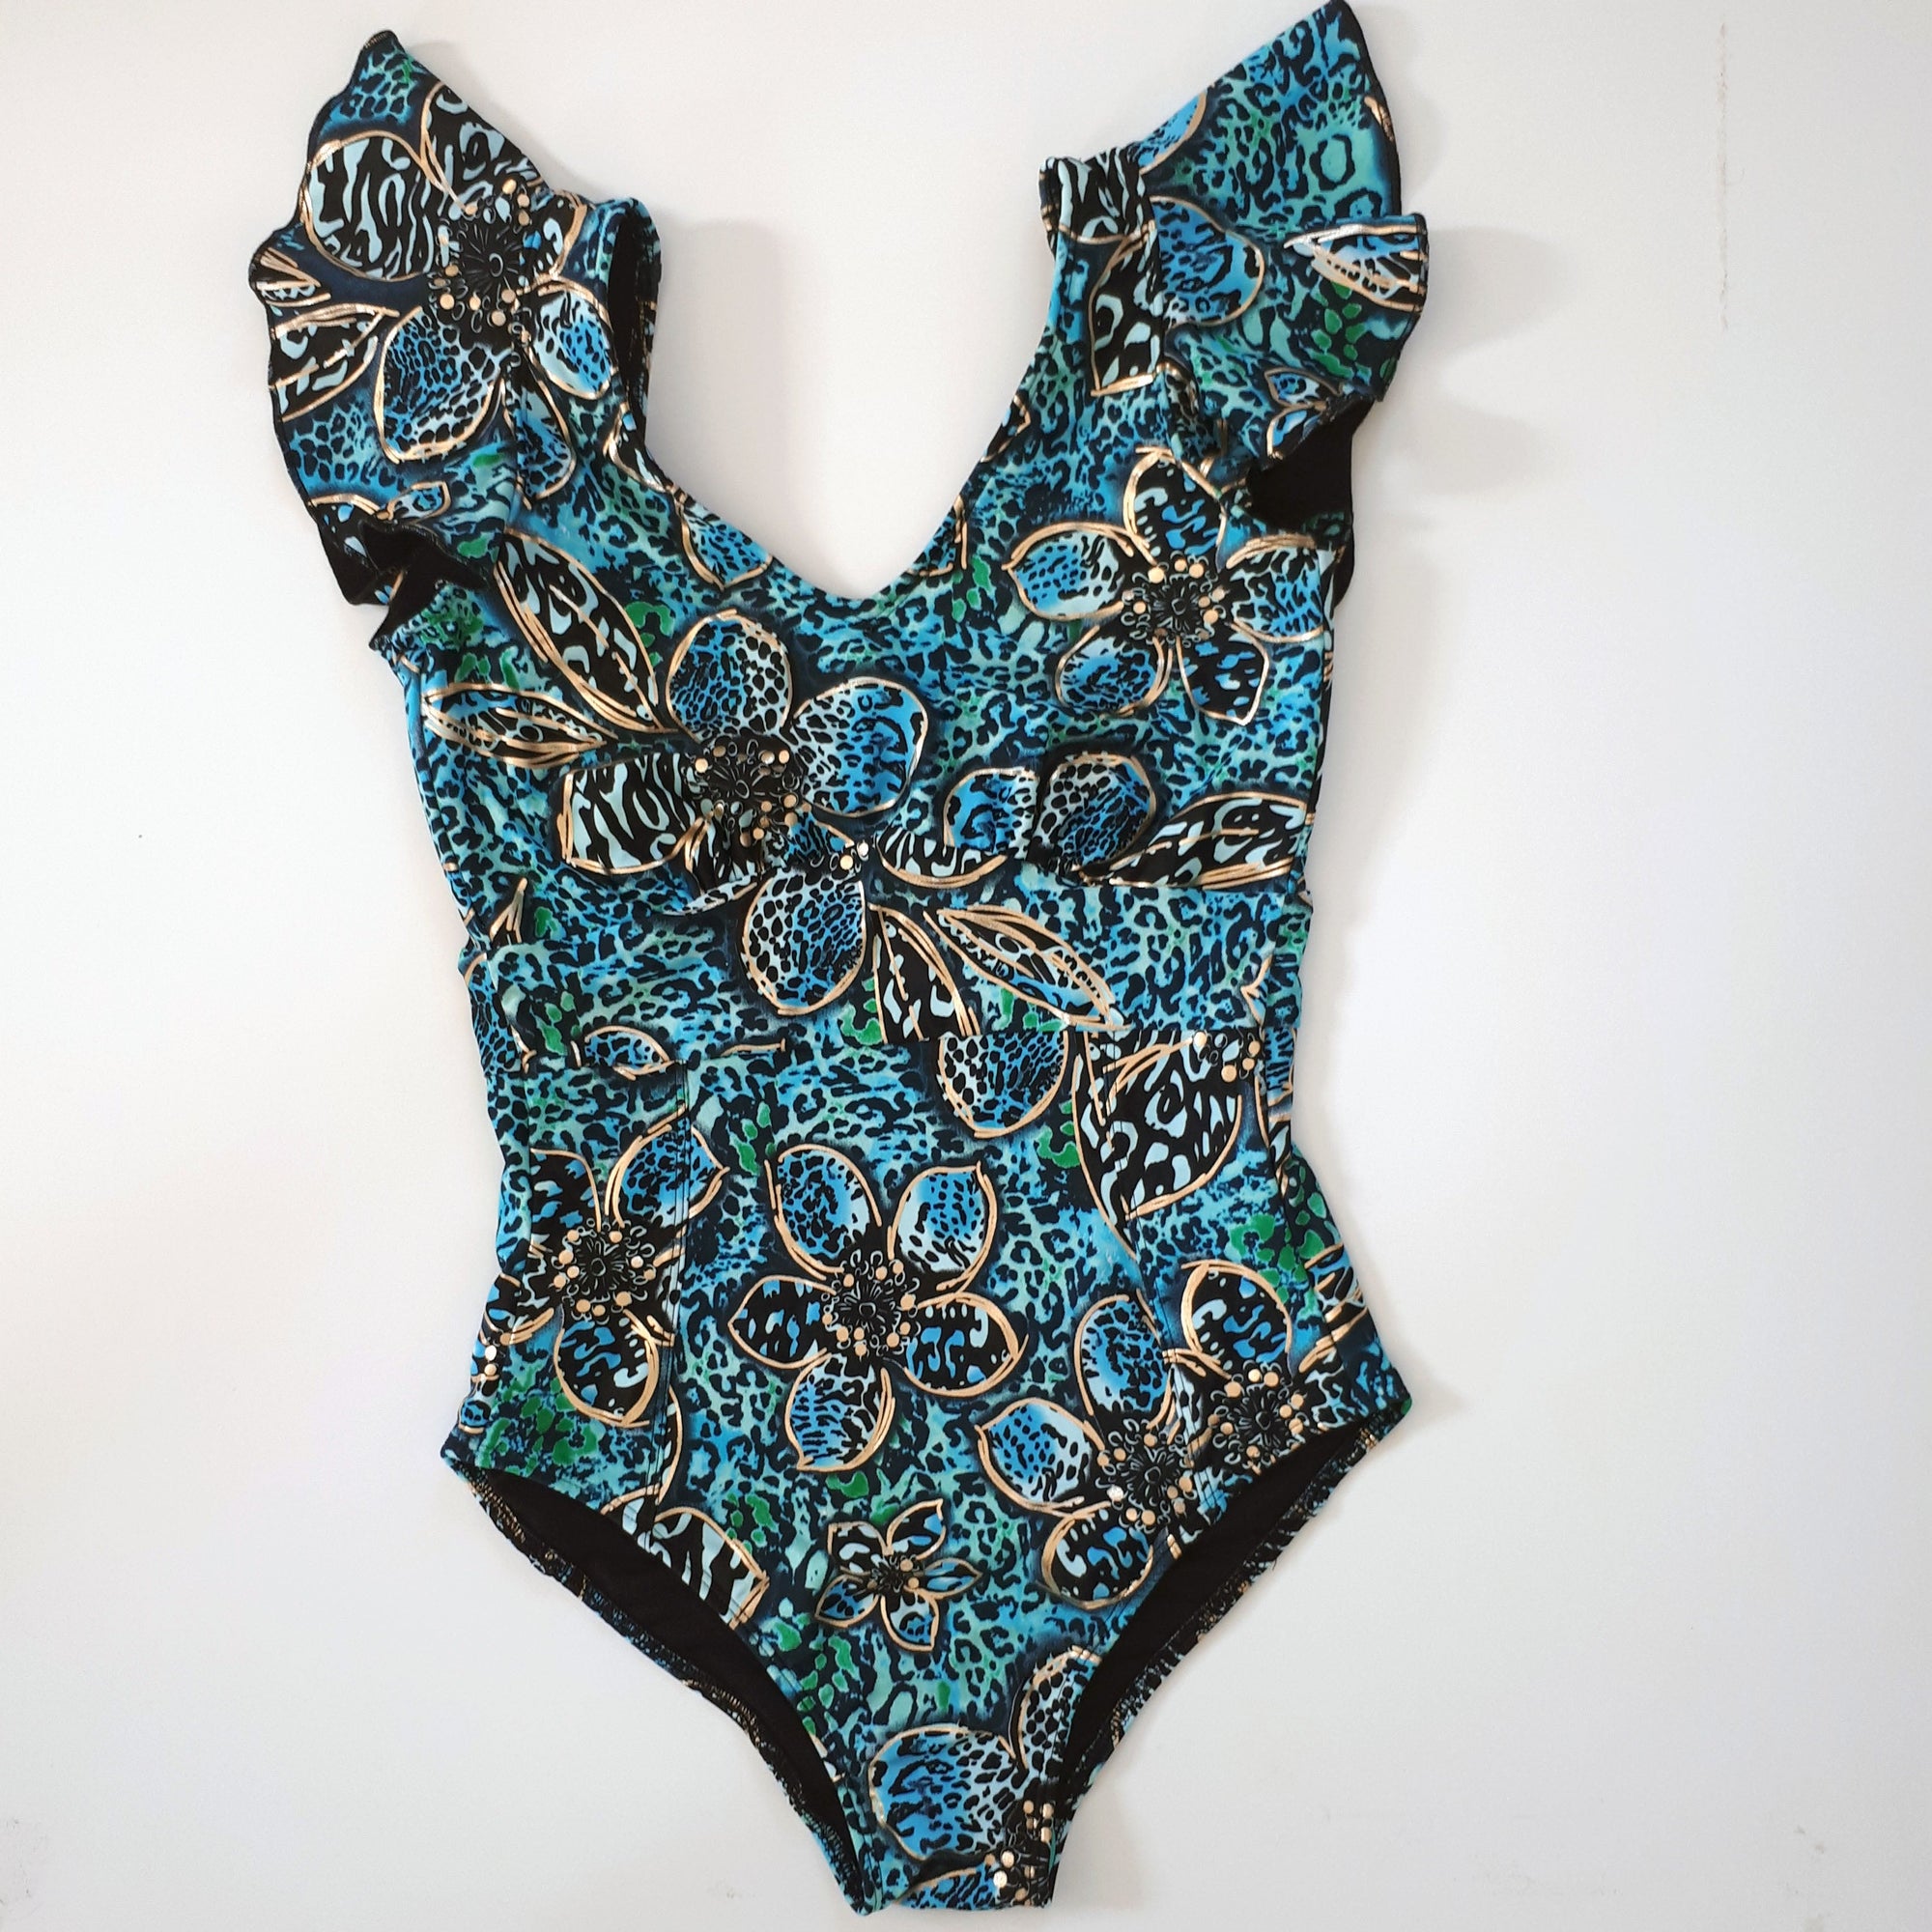 Bella 1-Piece Swimsuit by Positano Lifestyle Boutique